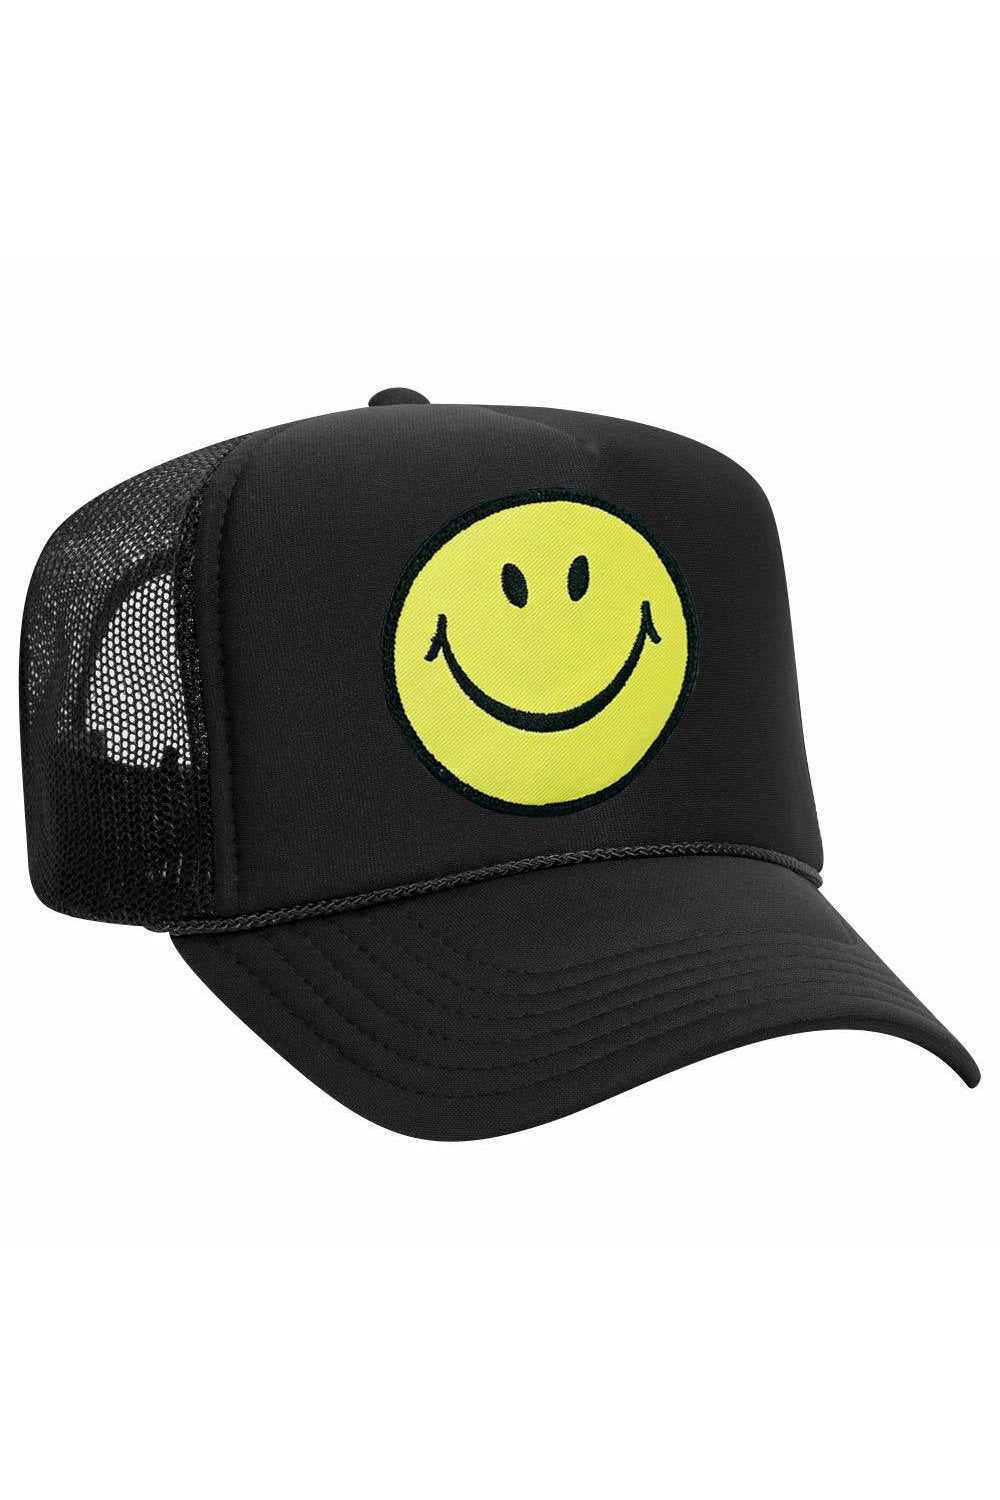 SMILEY VINTAGE TRUCKER HAT HATS Aviator Nation OS BLACK 